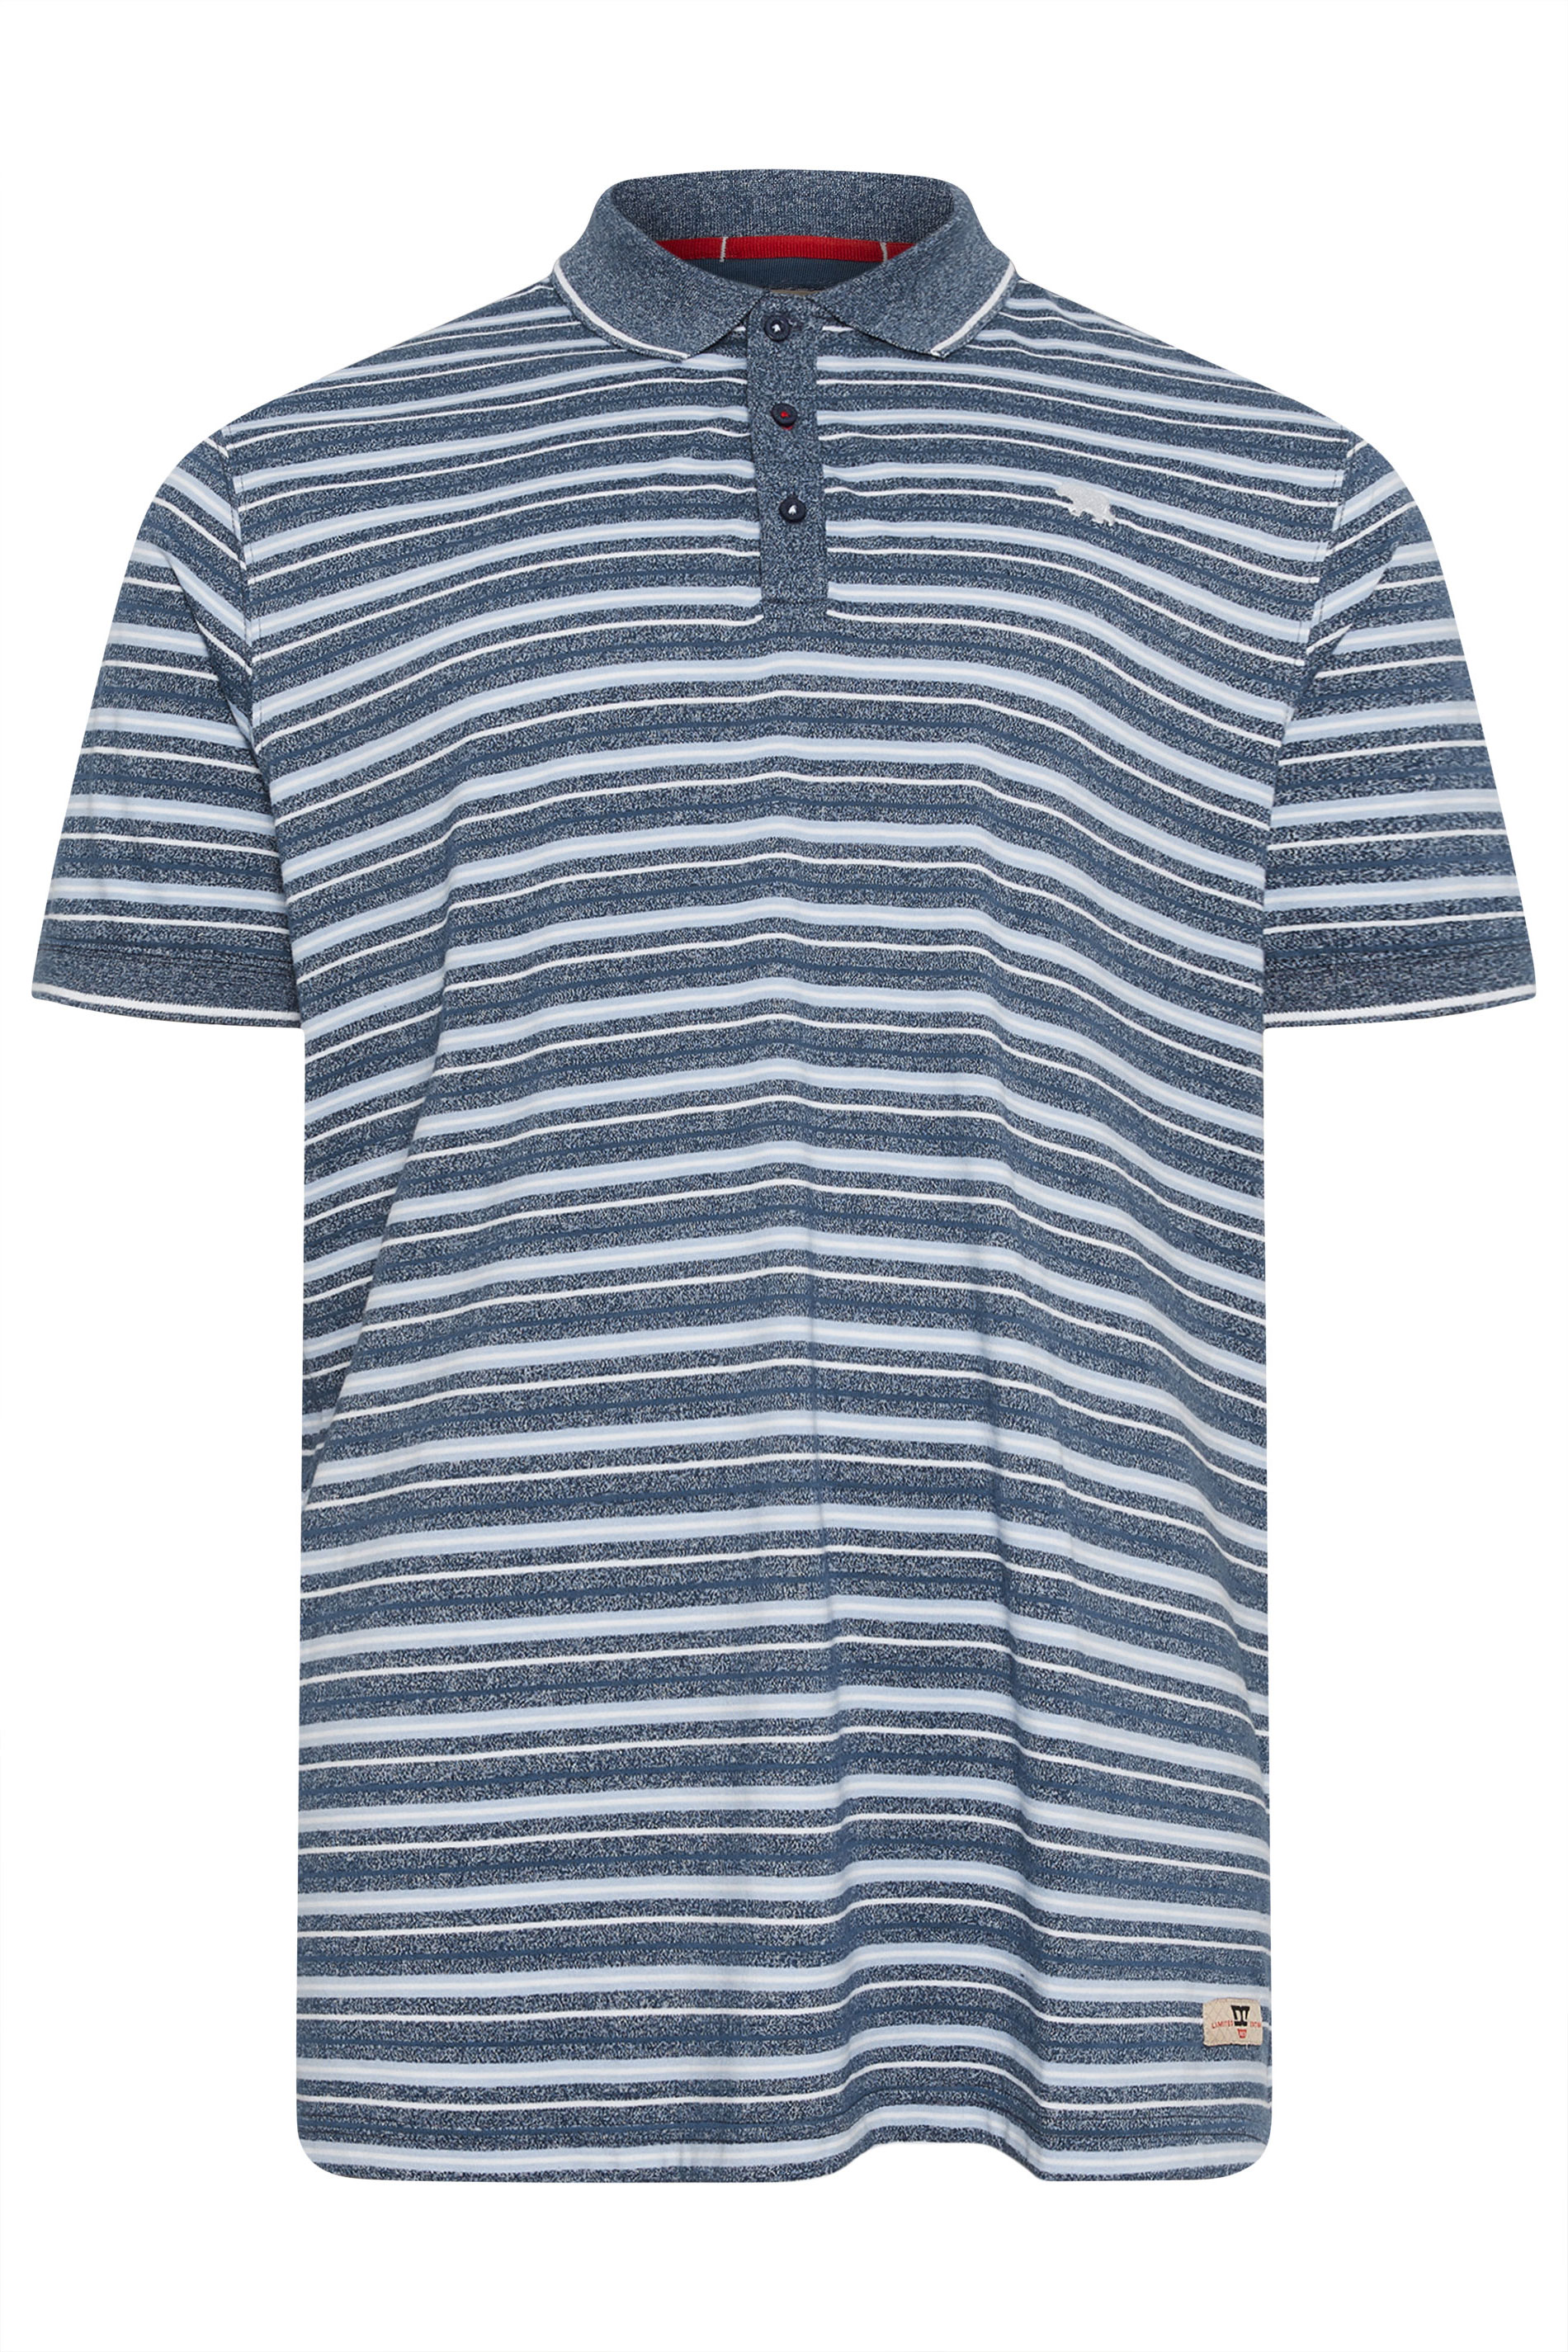 D555 Big & Tall Grey Stripe Polo Shirt | BadRhino 3